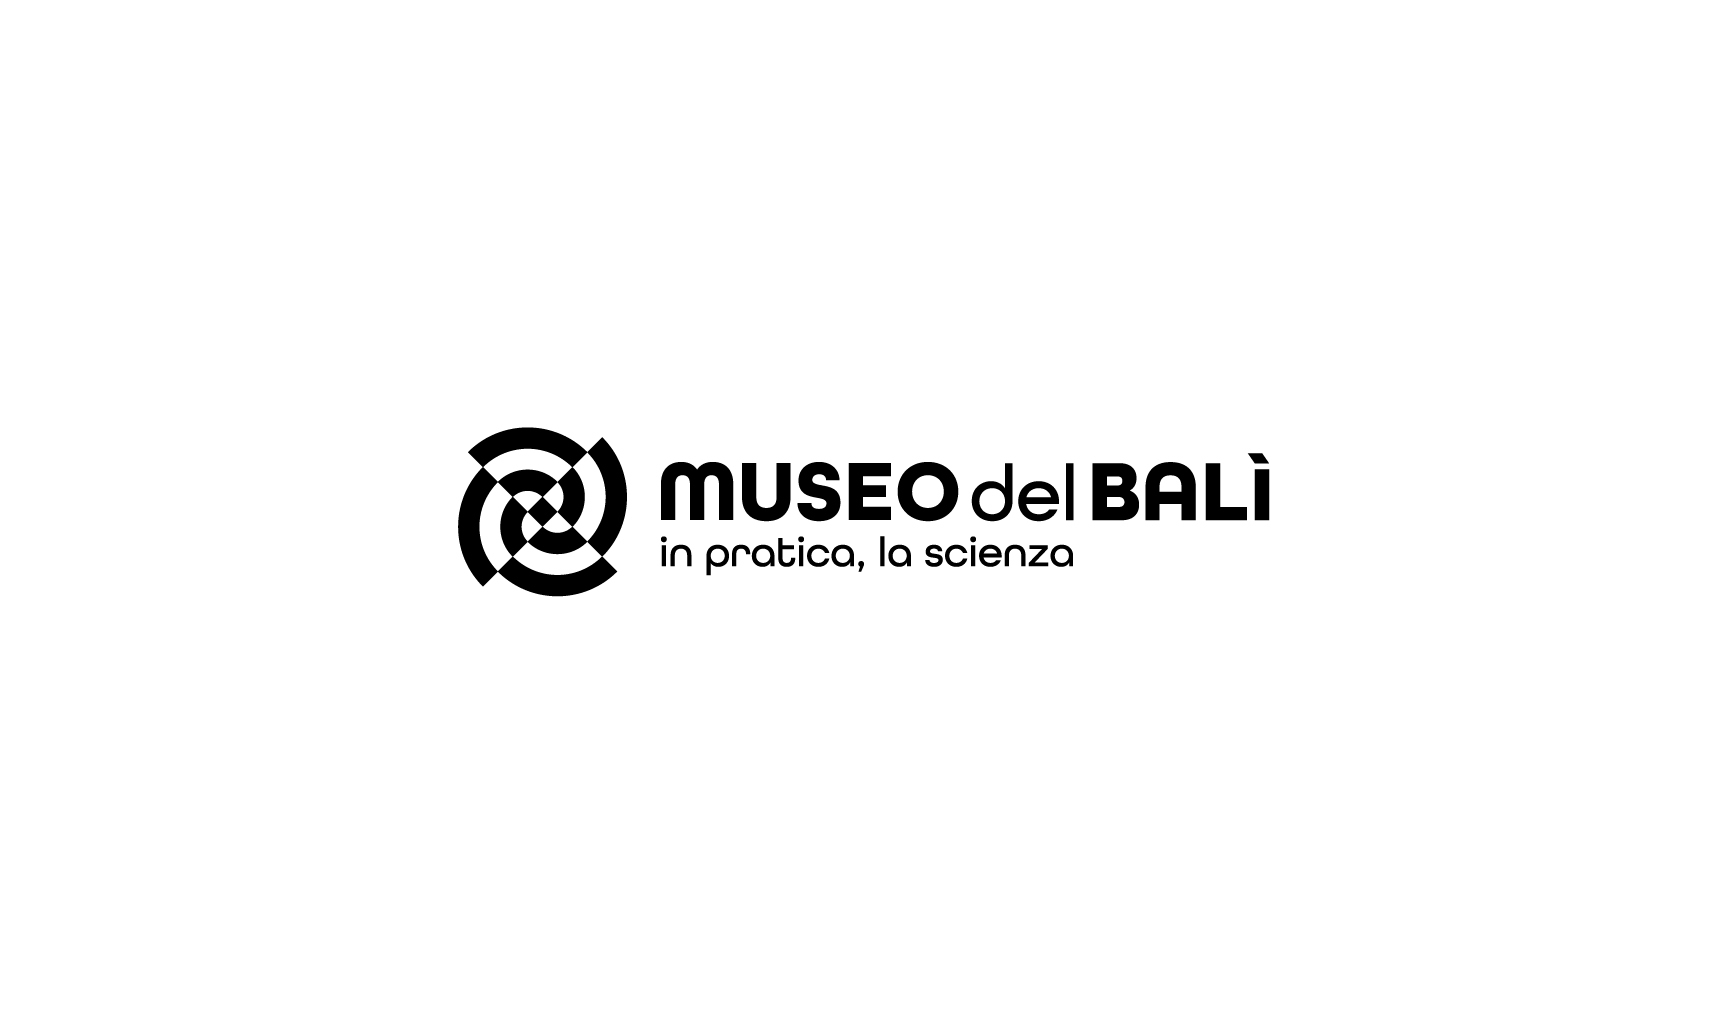 Nerodeco_Museo_bali_logo_5